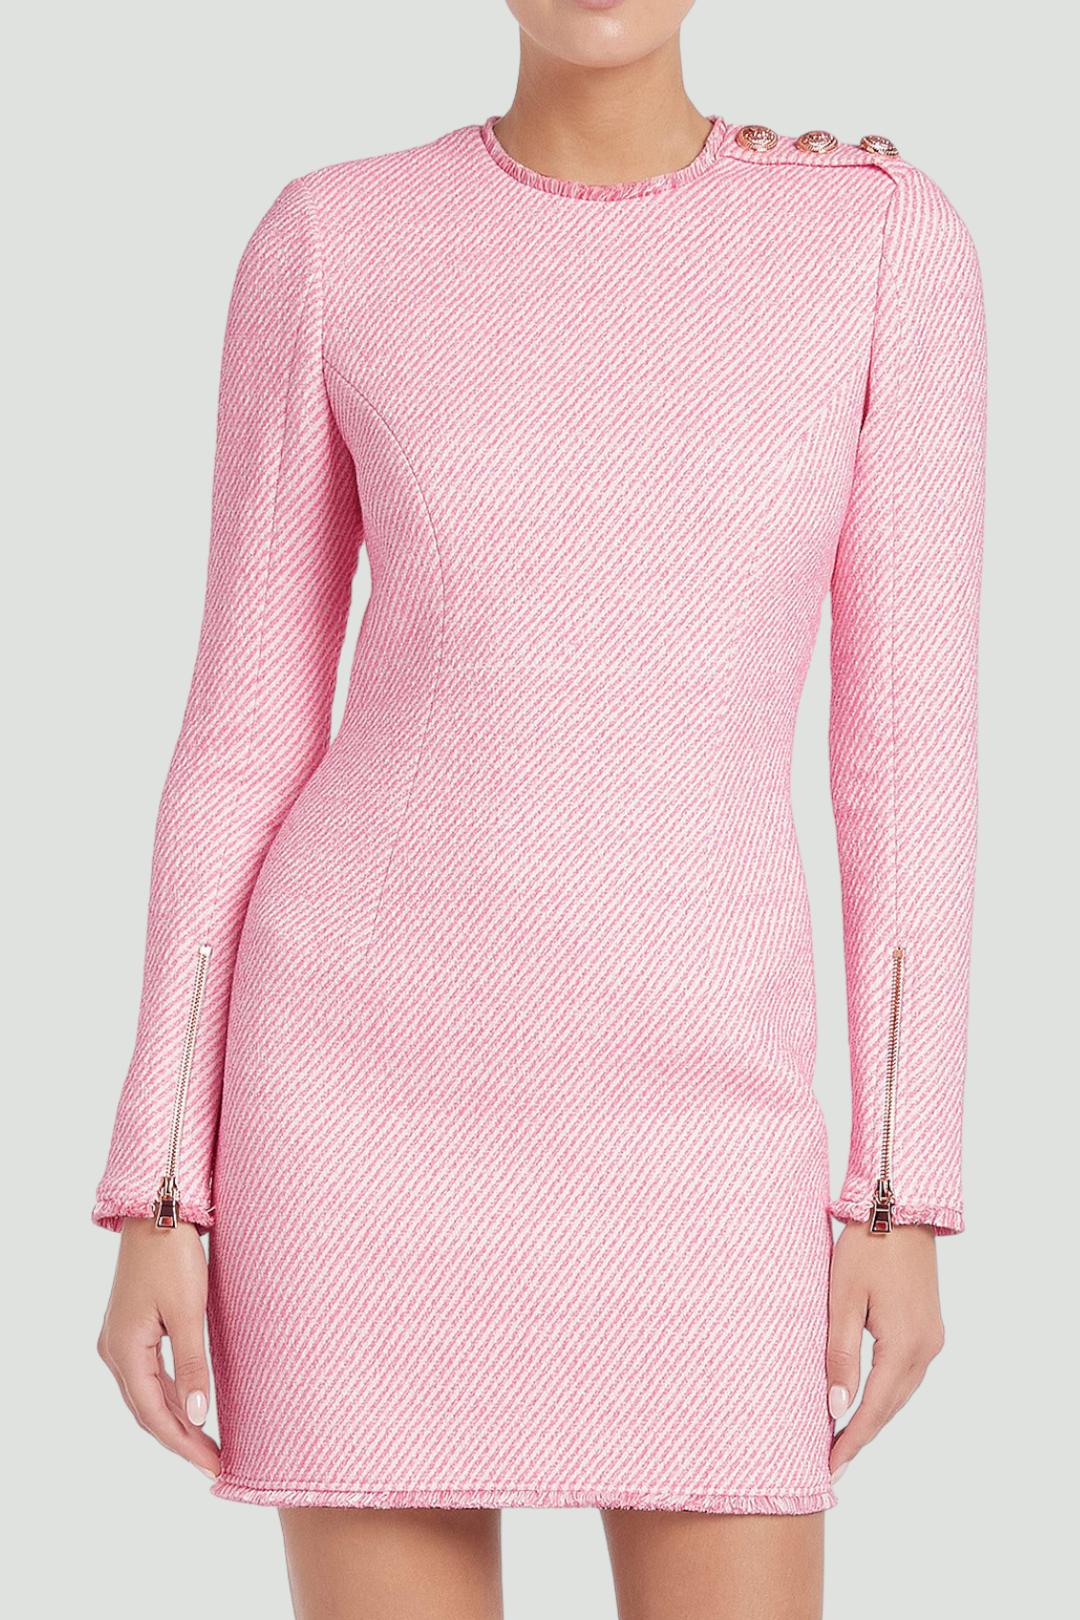 Charlotte Long Sleeve Mini Dress in Pink